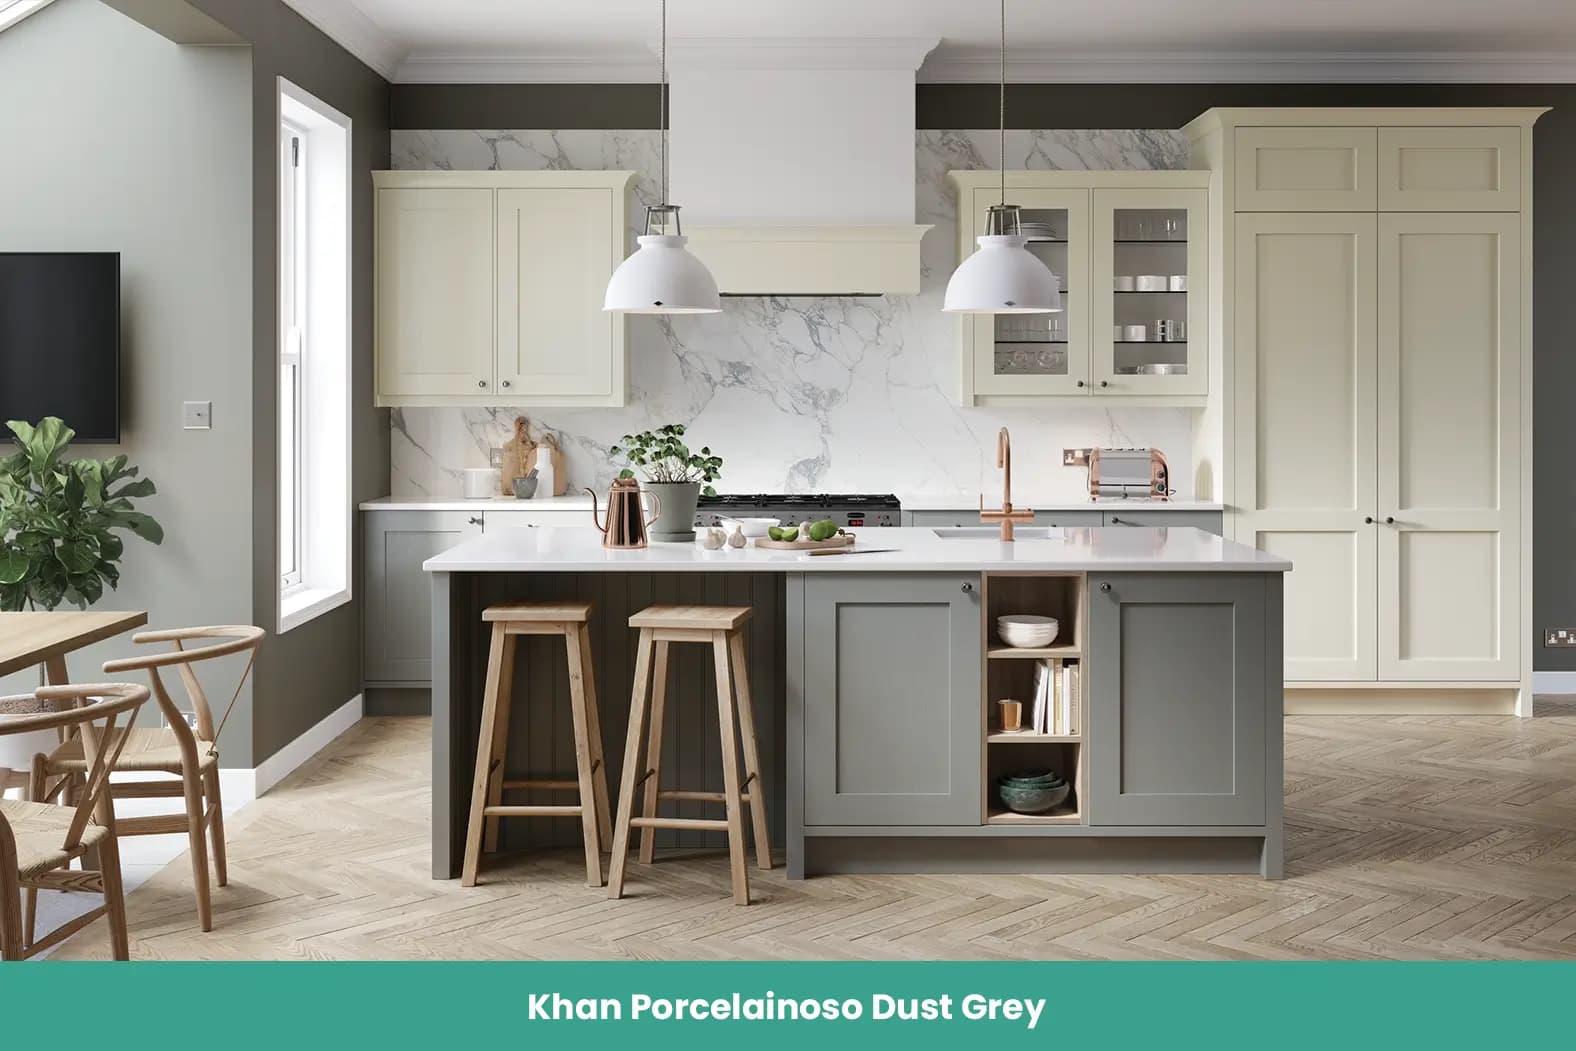 Khan Porcelainoso Dust Grey Kitchen